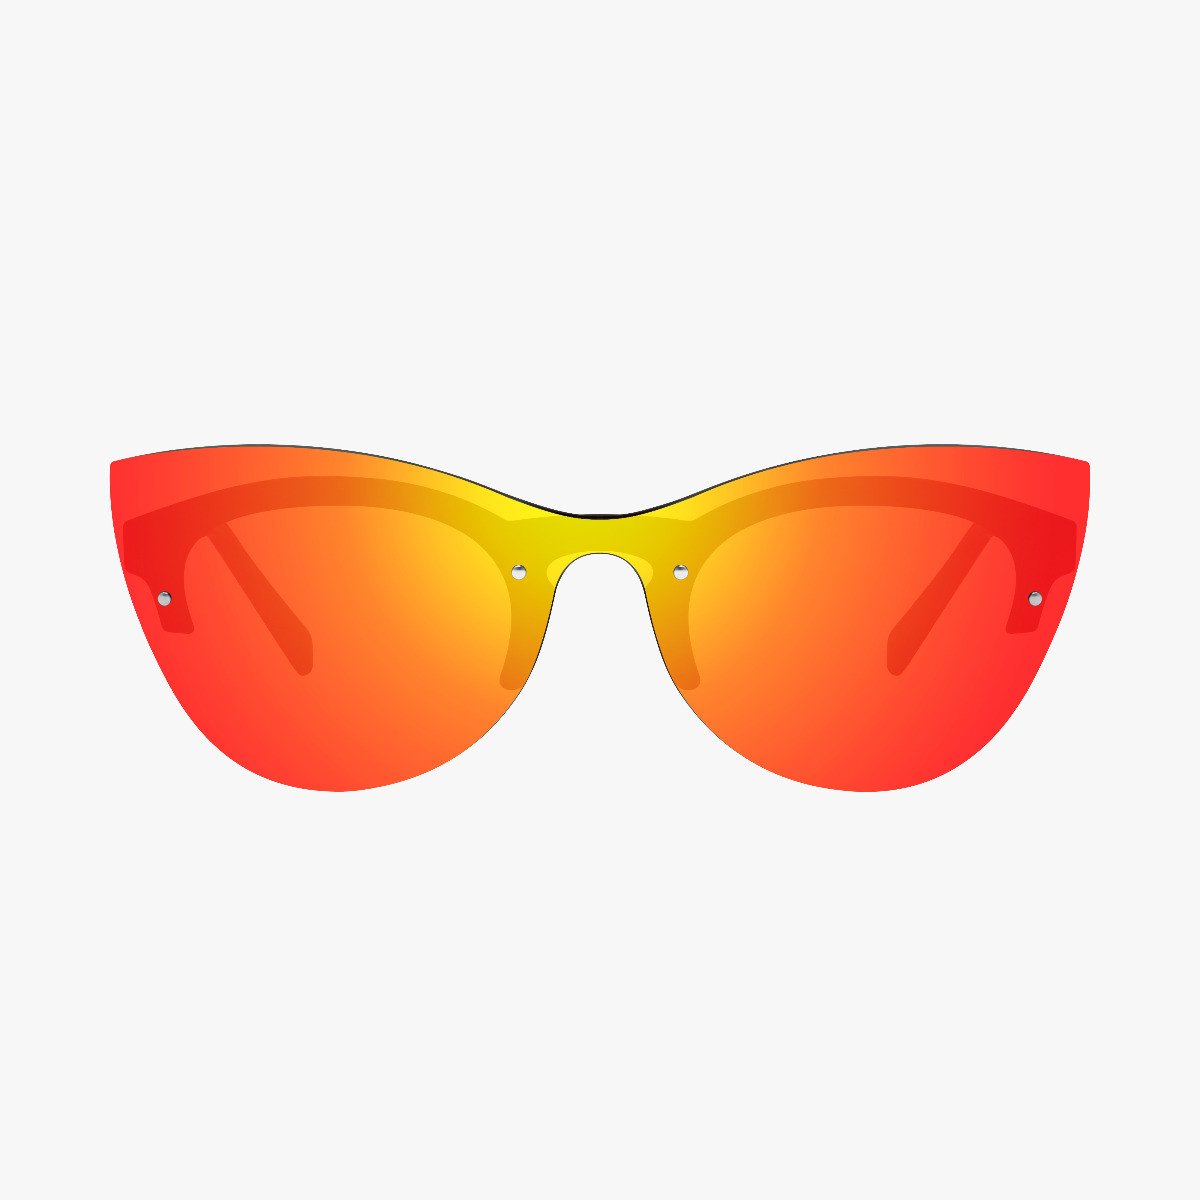 Scicon Sports | Phantom Lifestyle Women's Sunglasses - Demi Frame, Red Lens - EY180606